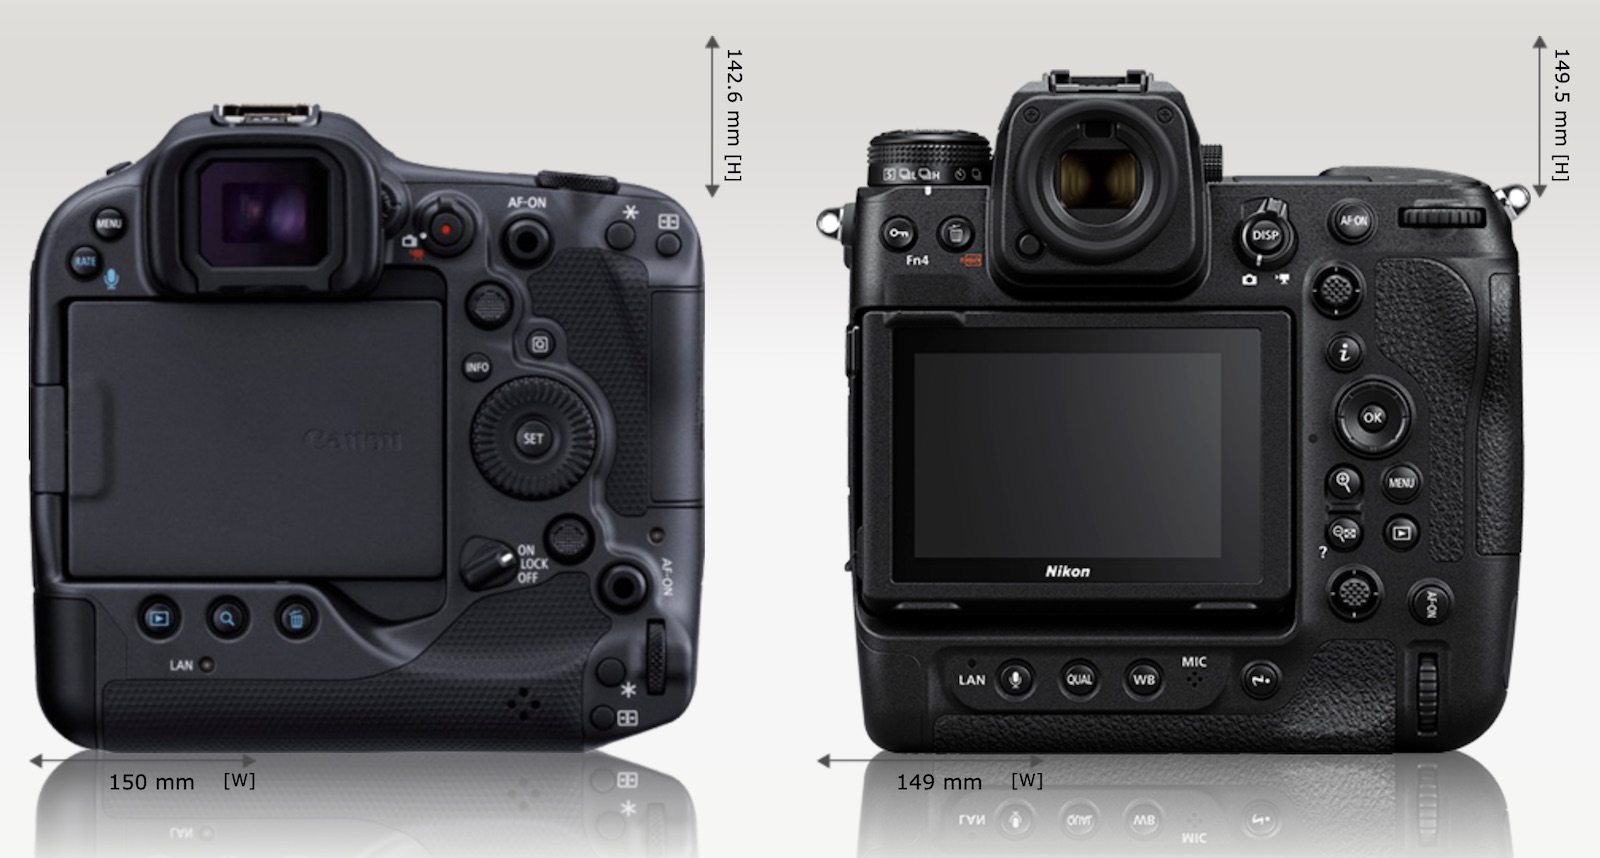 Nikon Z9 Mirrorless Digital Z9 Camera - B&H Photo